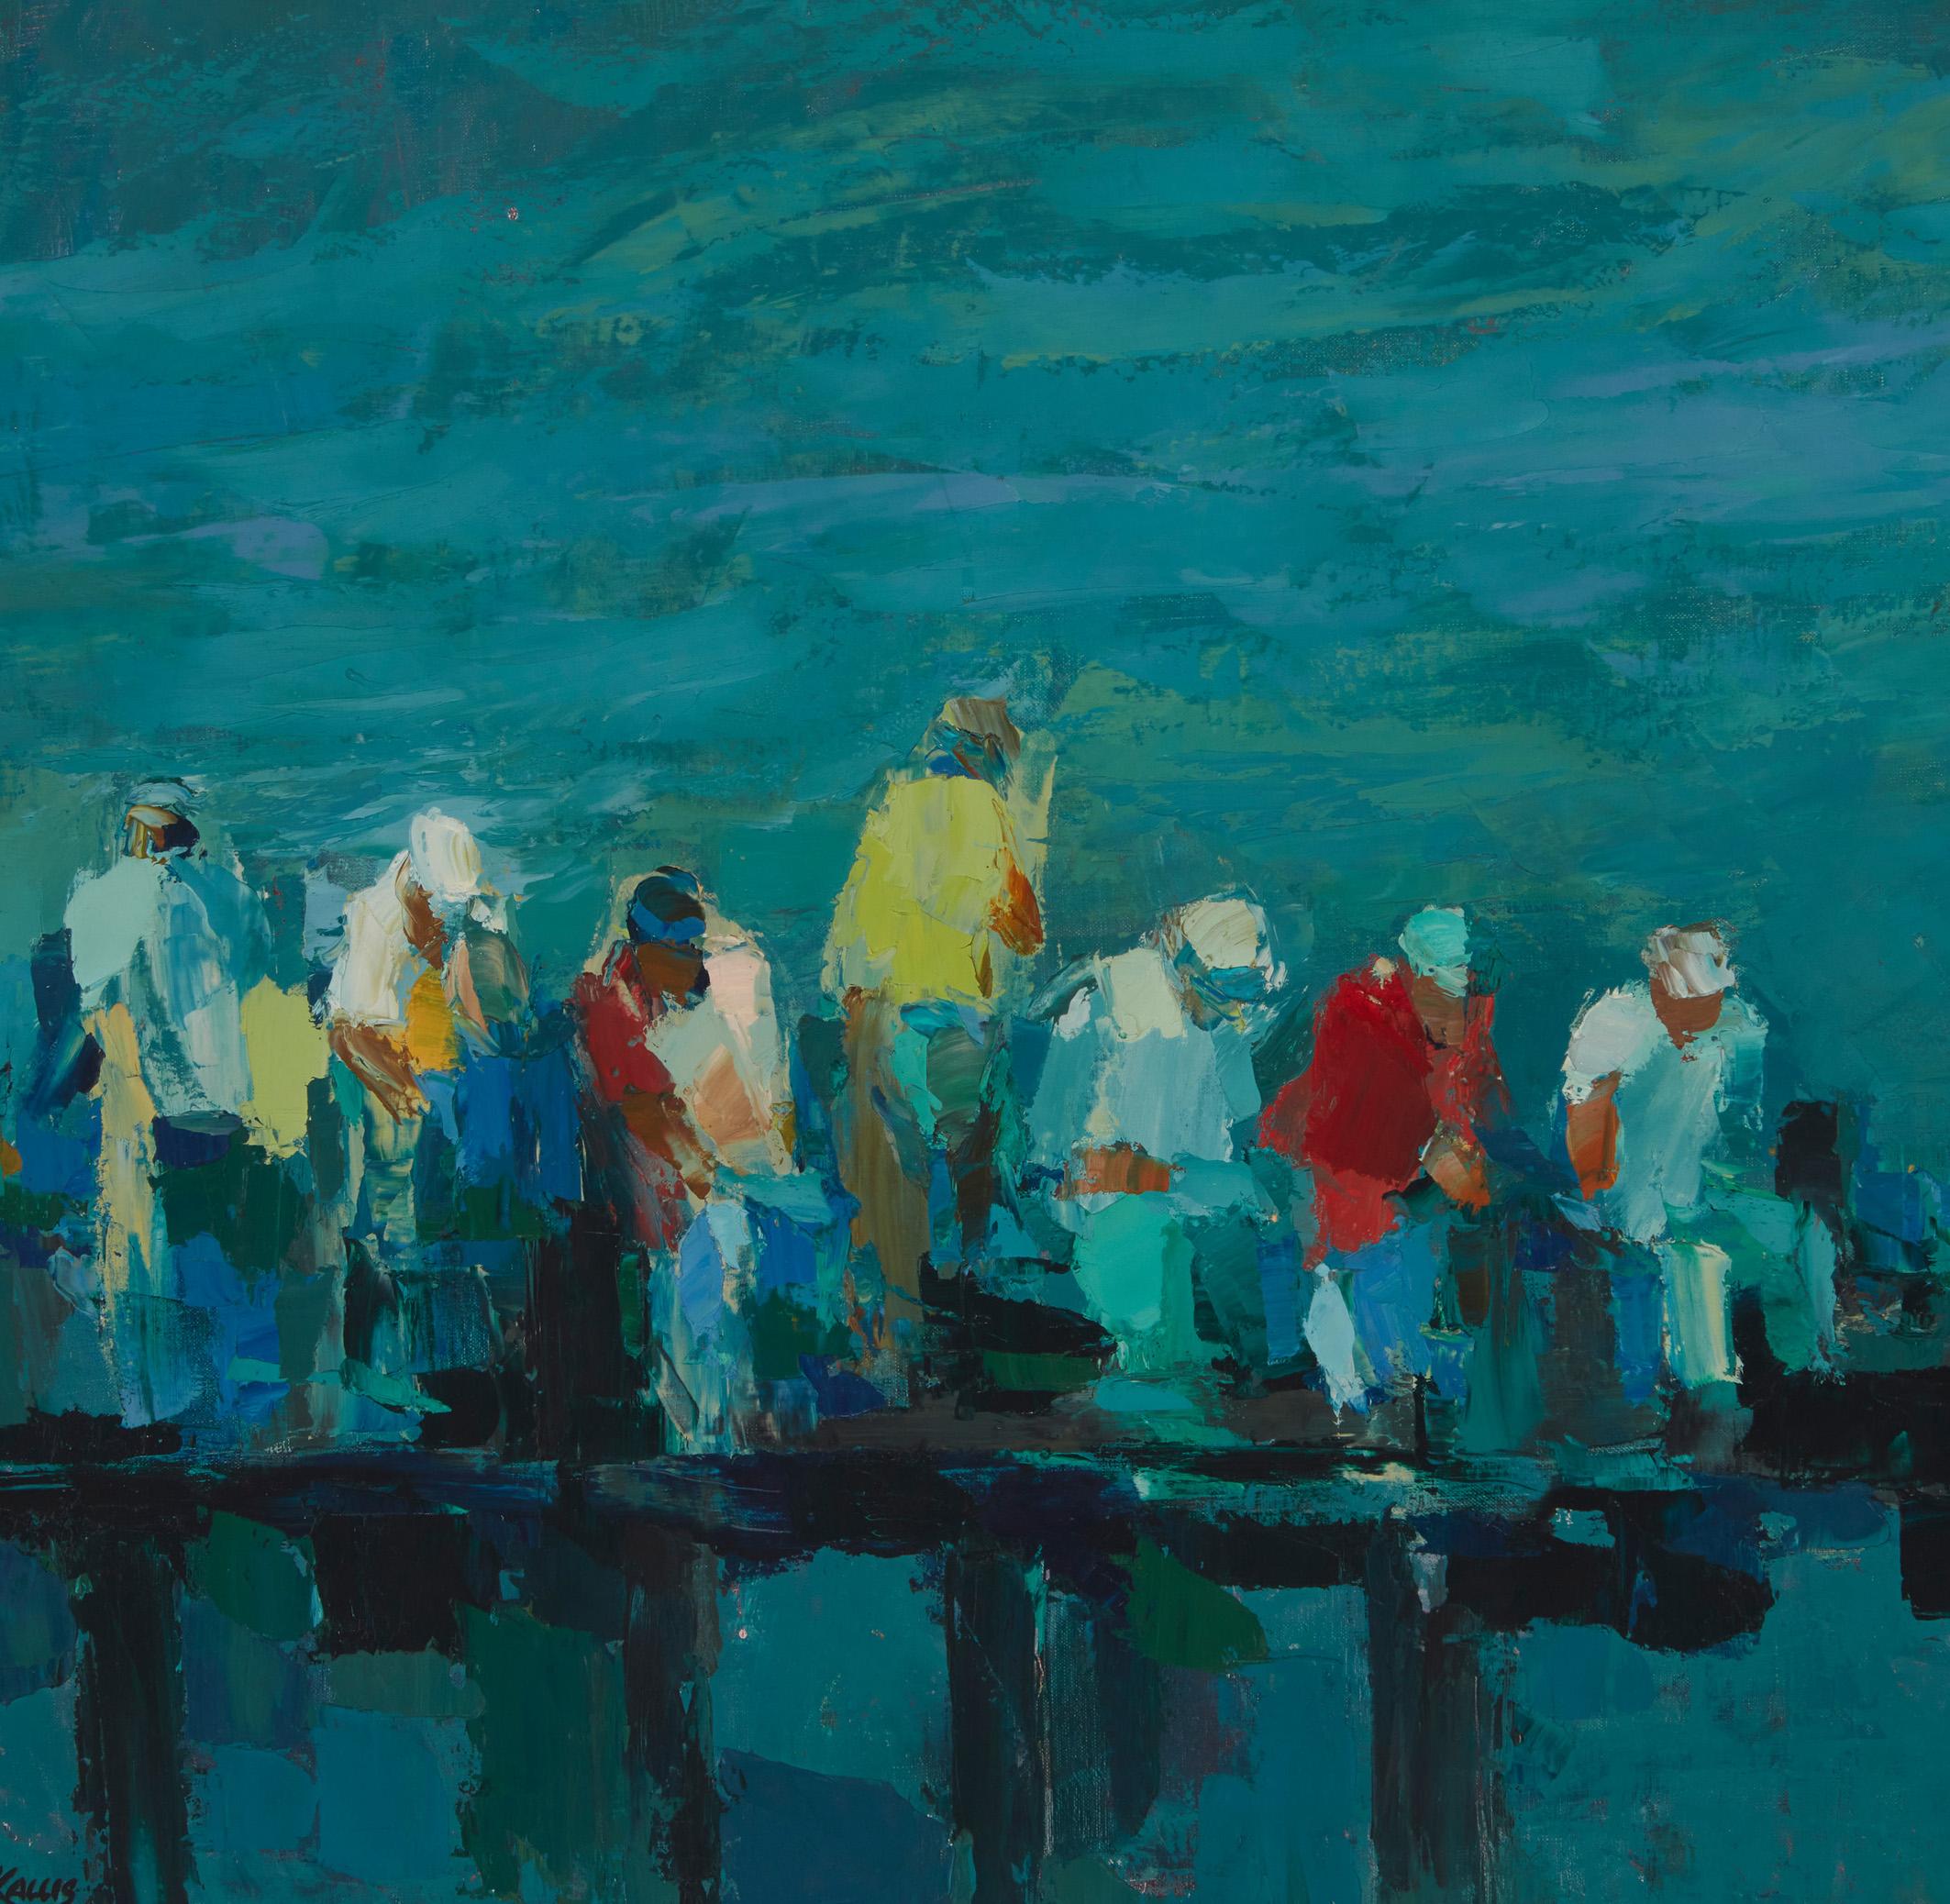 Figures on a Pier - Painting by Mischa Kallis